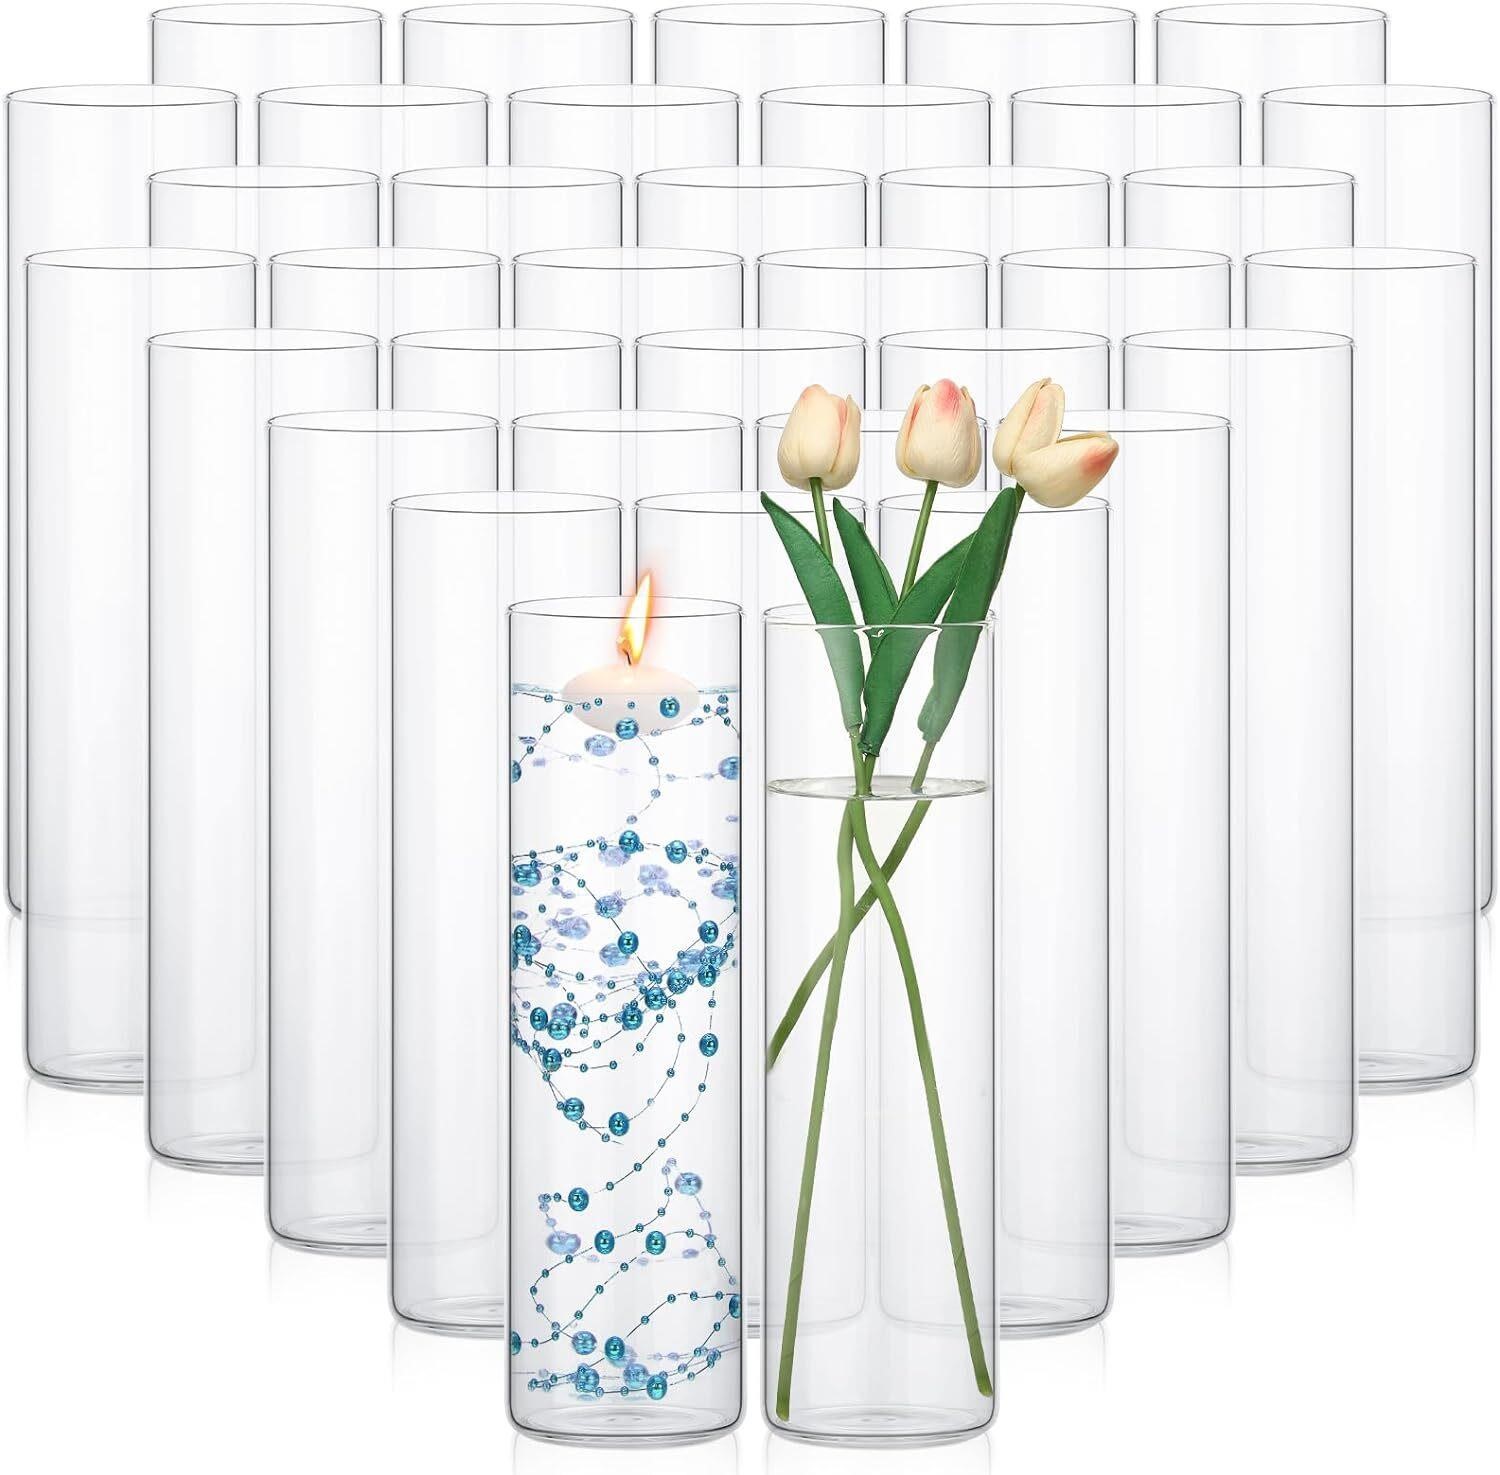 36 Pcs Glass Cylinder Vases  12 x 3.35 Inch